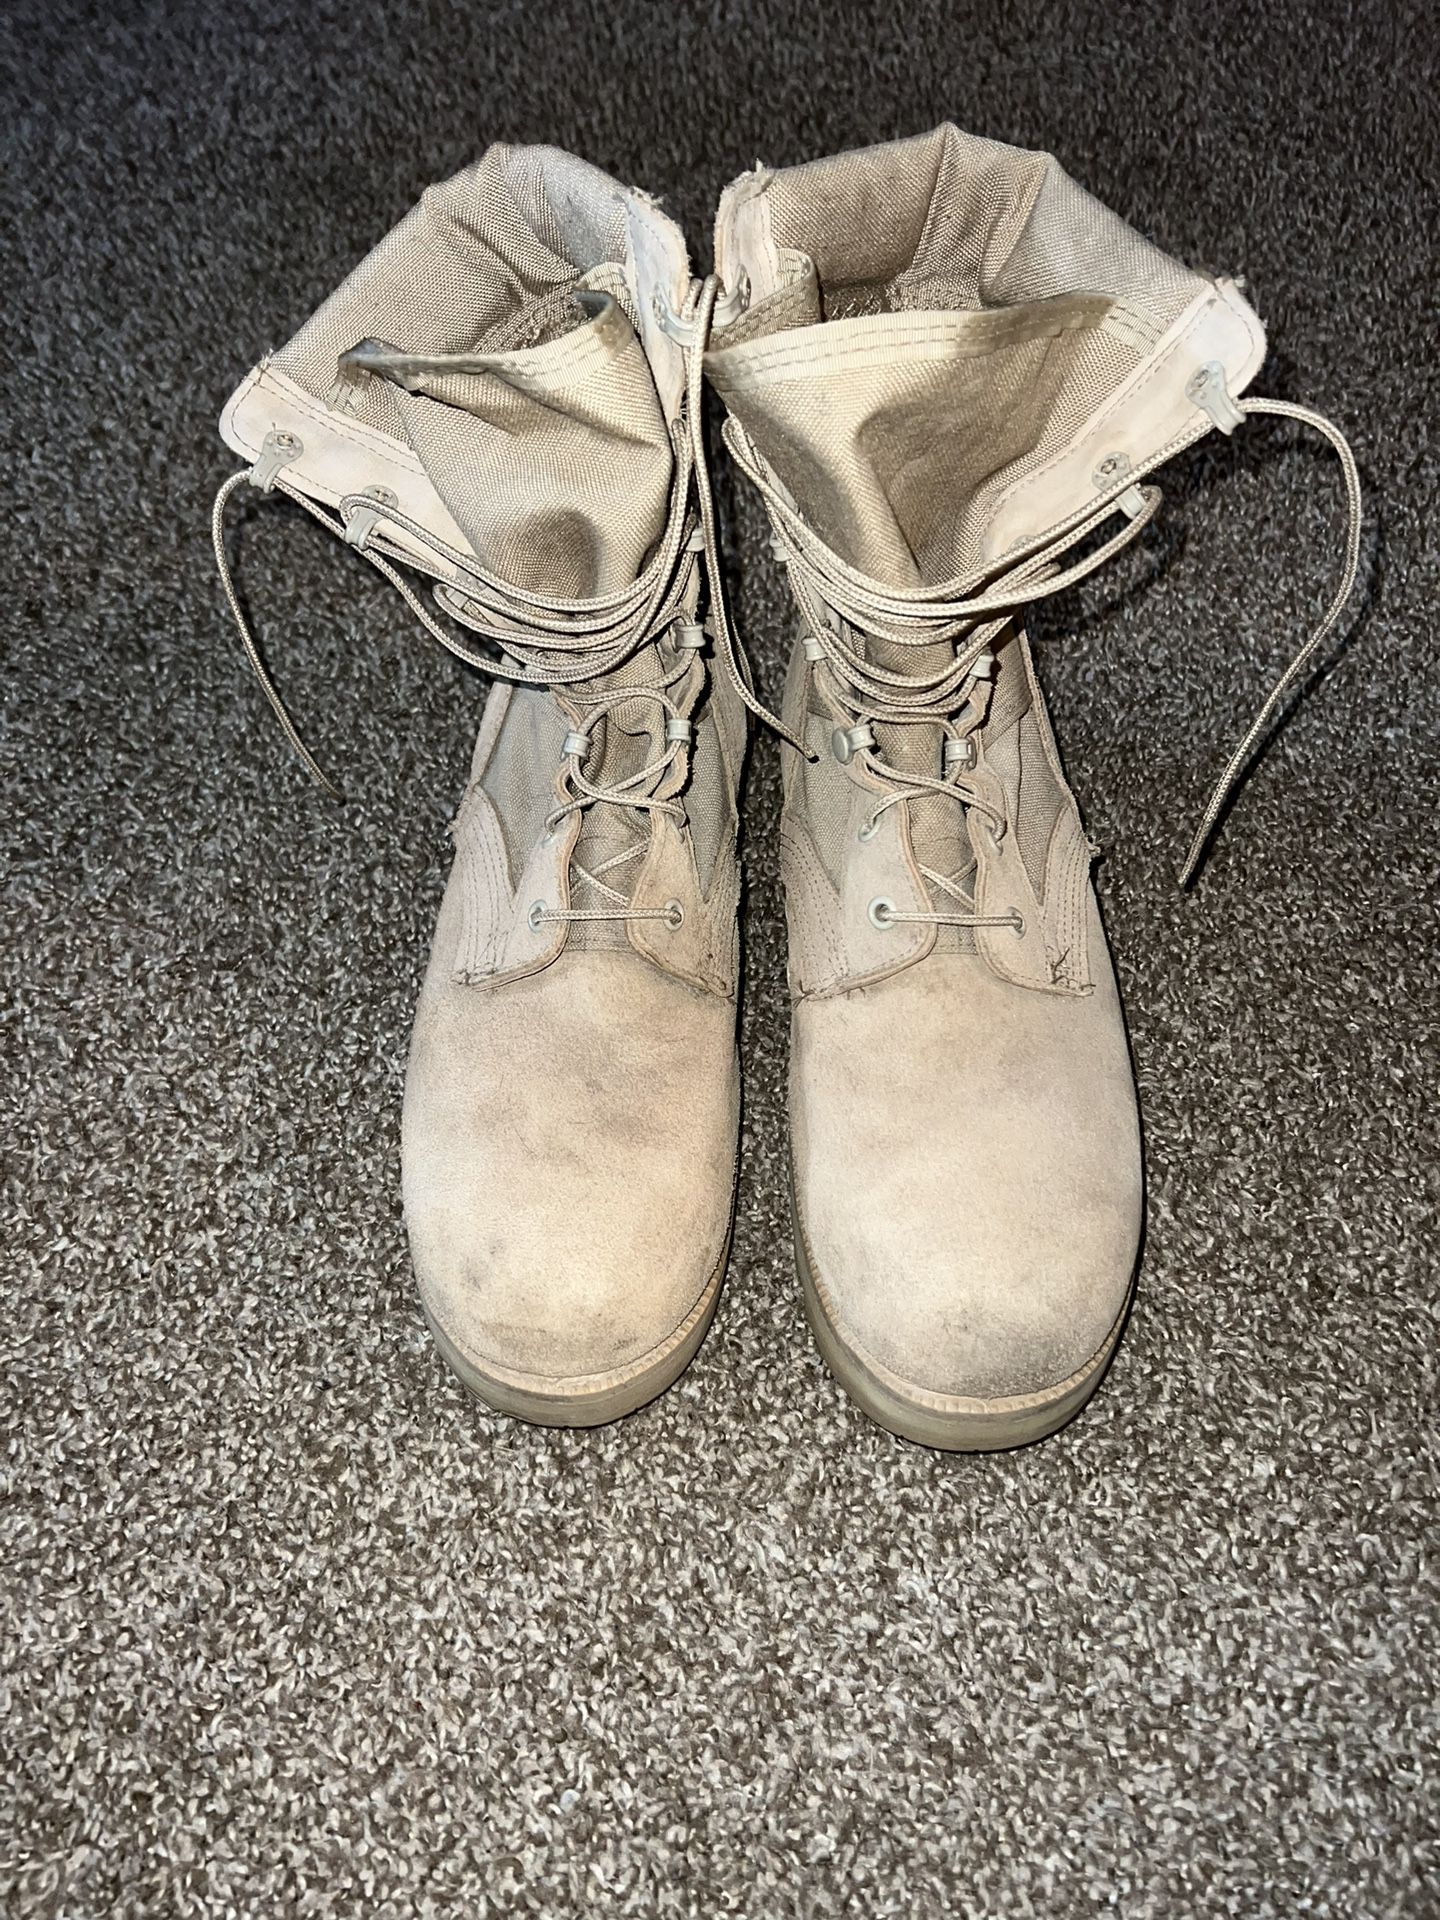 Vibram Coyote Desert Military Boots